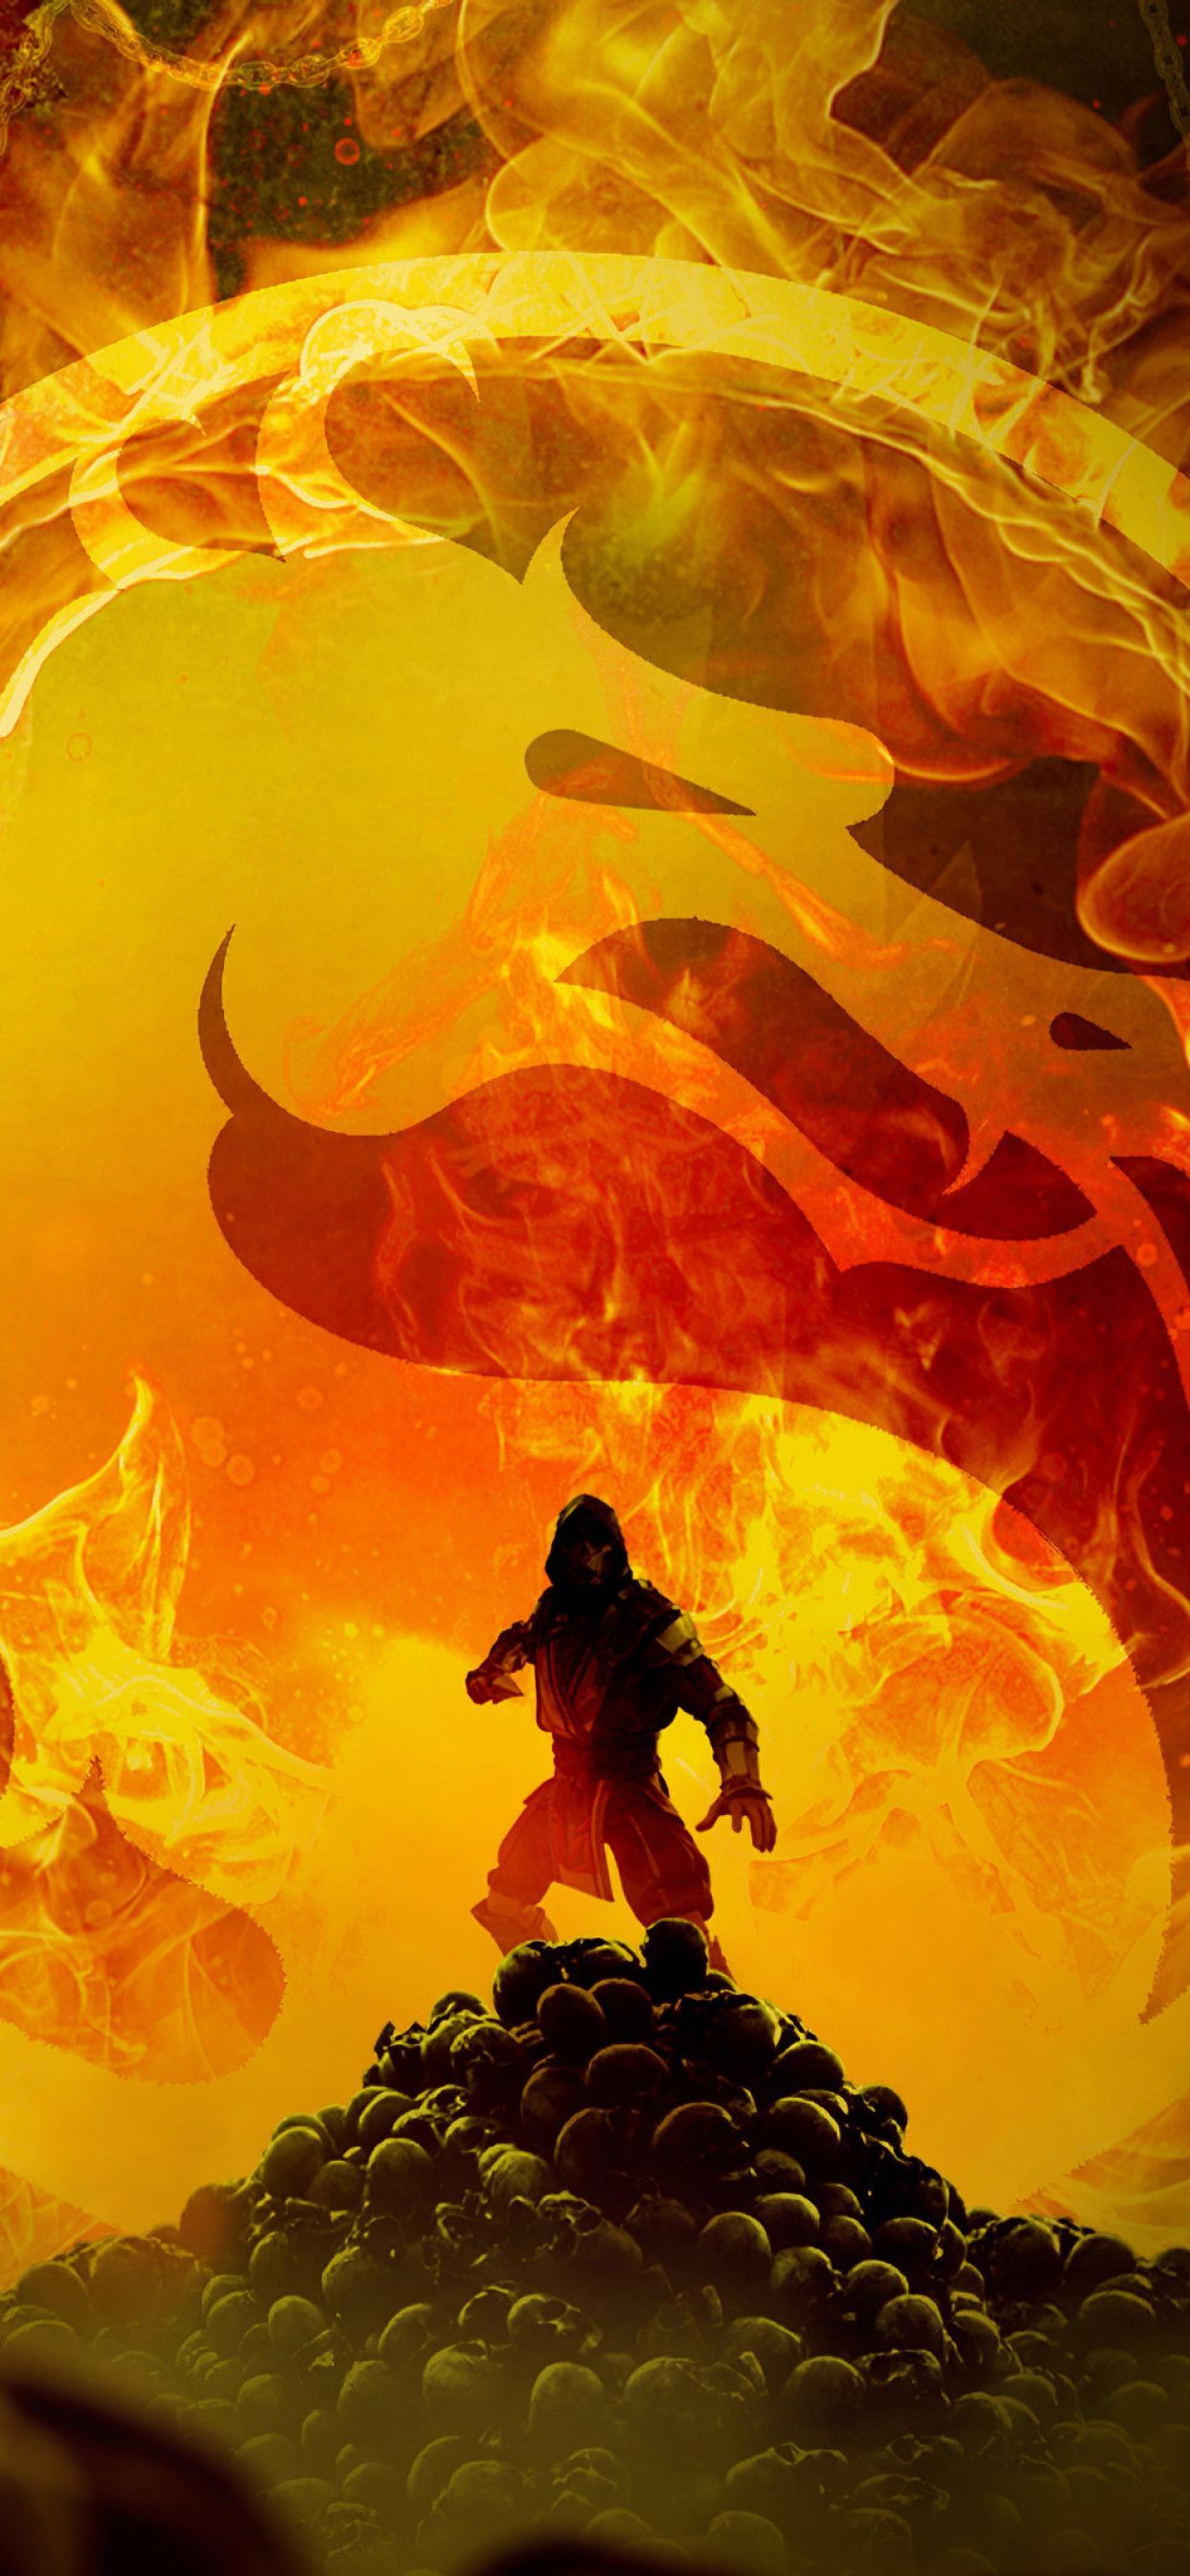 Mortal Kombat 11 iPhone Wallpaper Free Mortal Kombat 11 iPhone Background